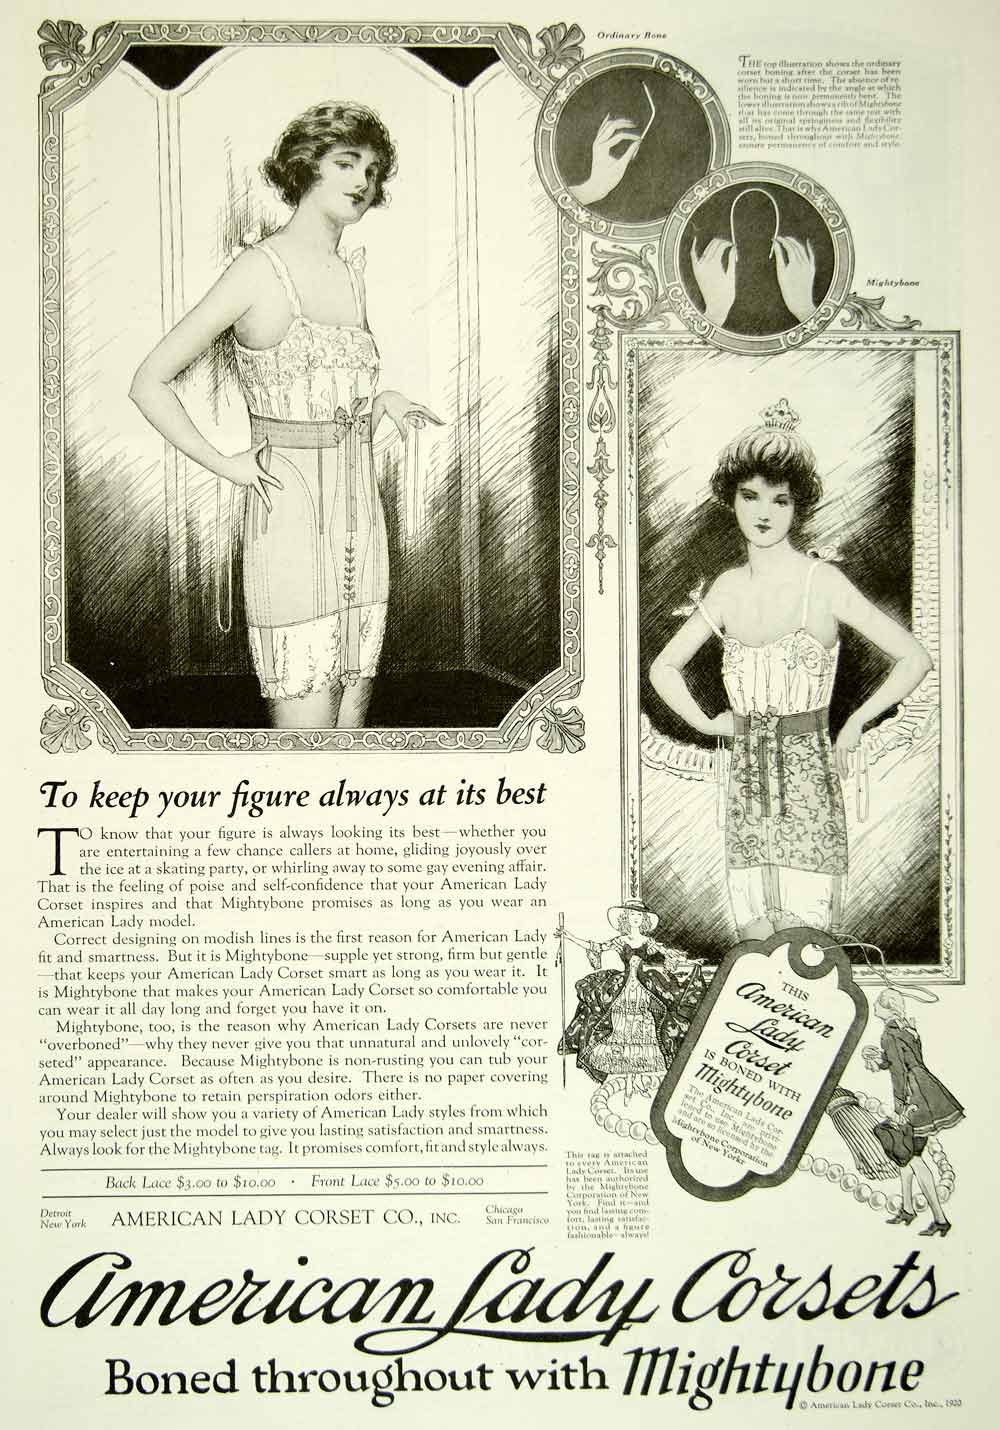 1937 Ad Vintage Gossard Lingerie Bra Girdle Corset Goss-Amour Fashion –  Period Paper Historic Art LLC